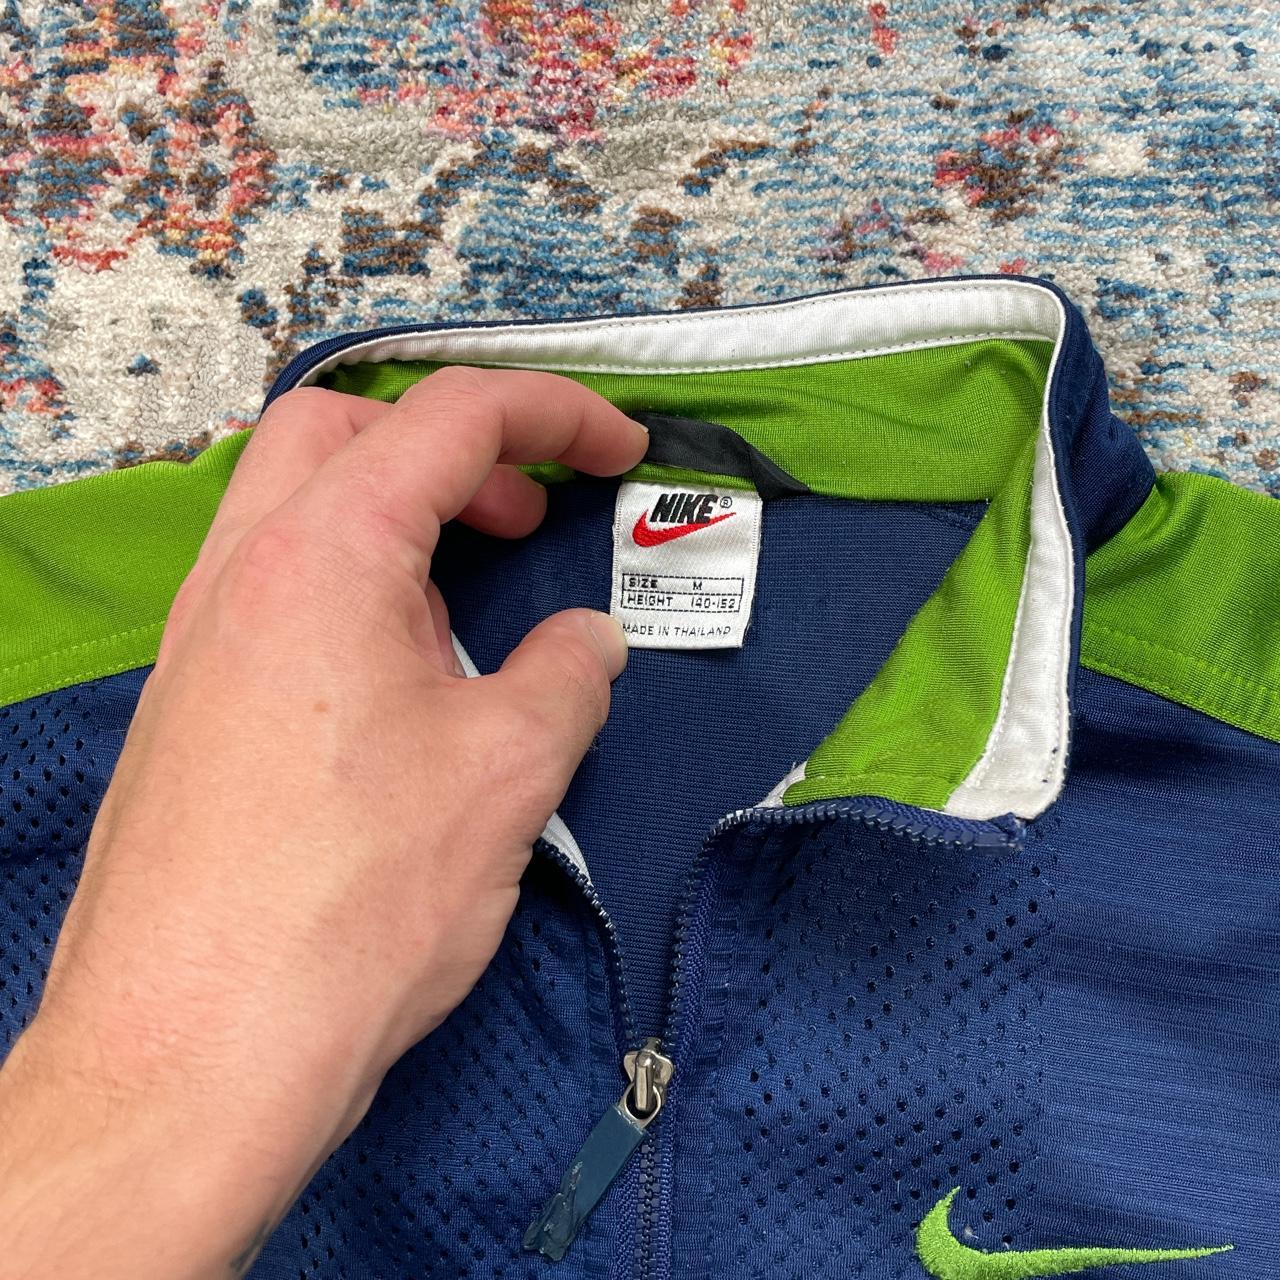 Vintage Nike Navy & Green Jacket